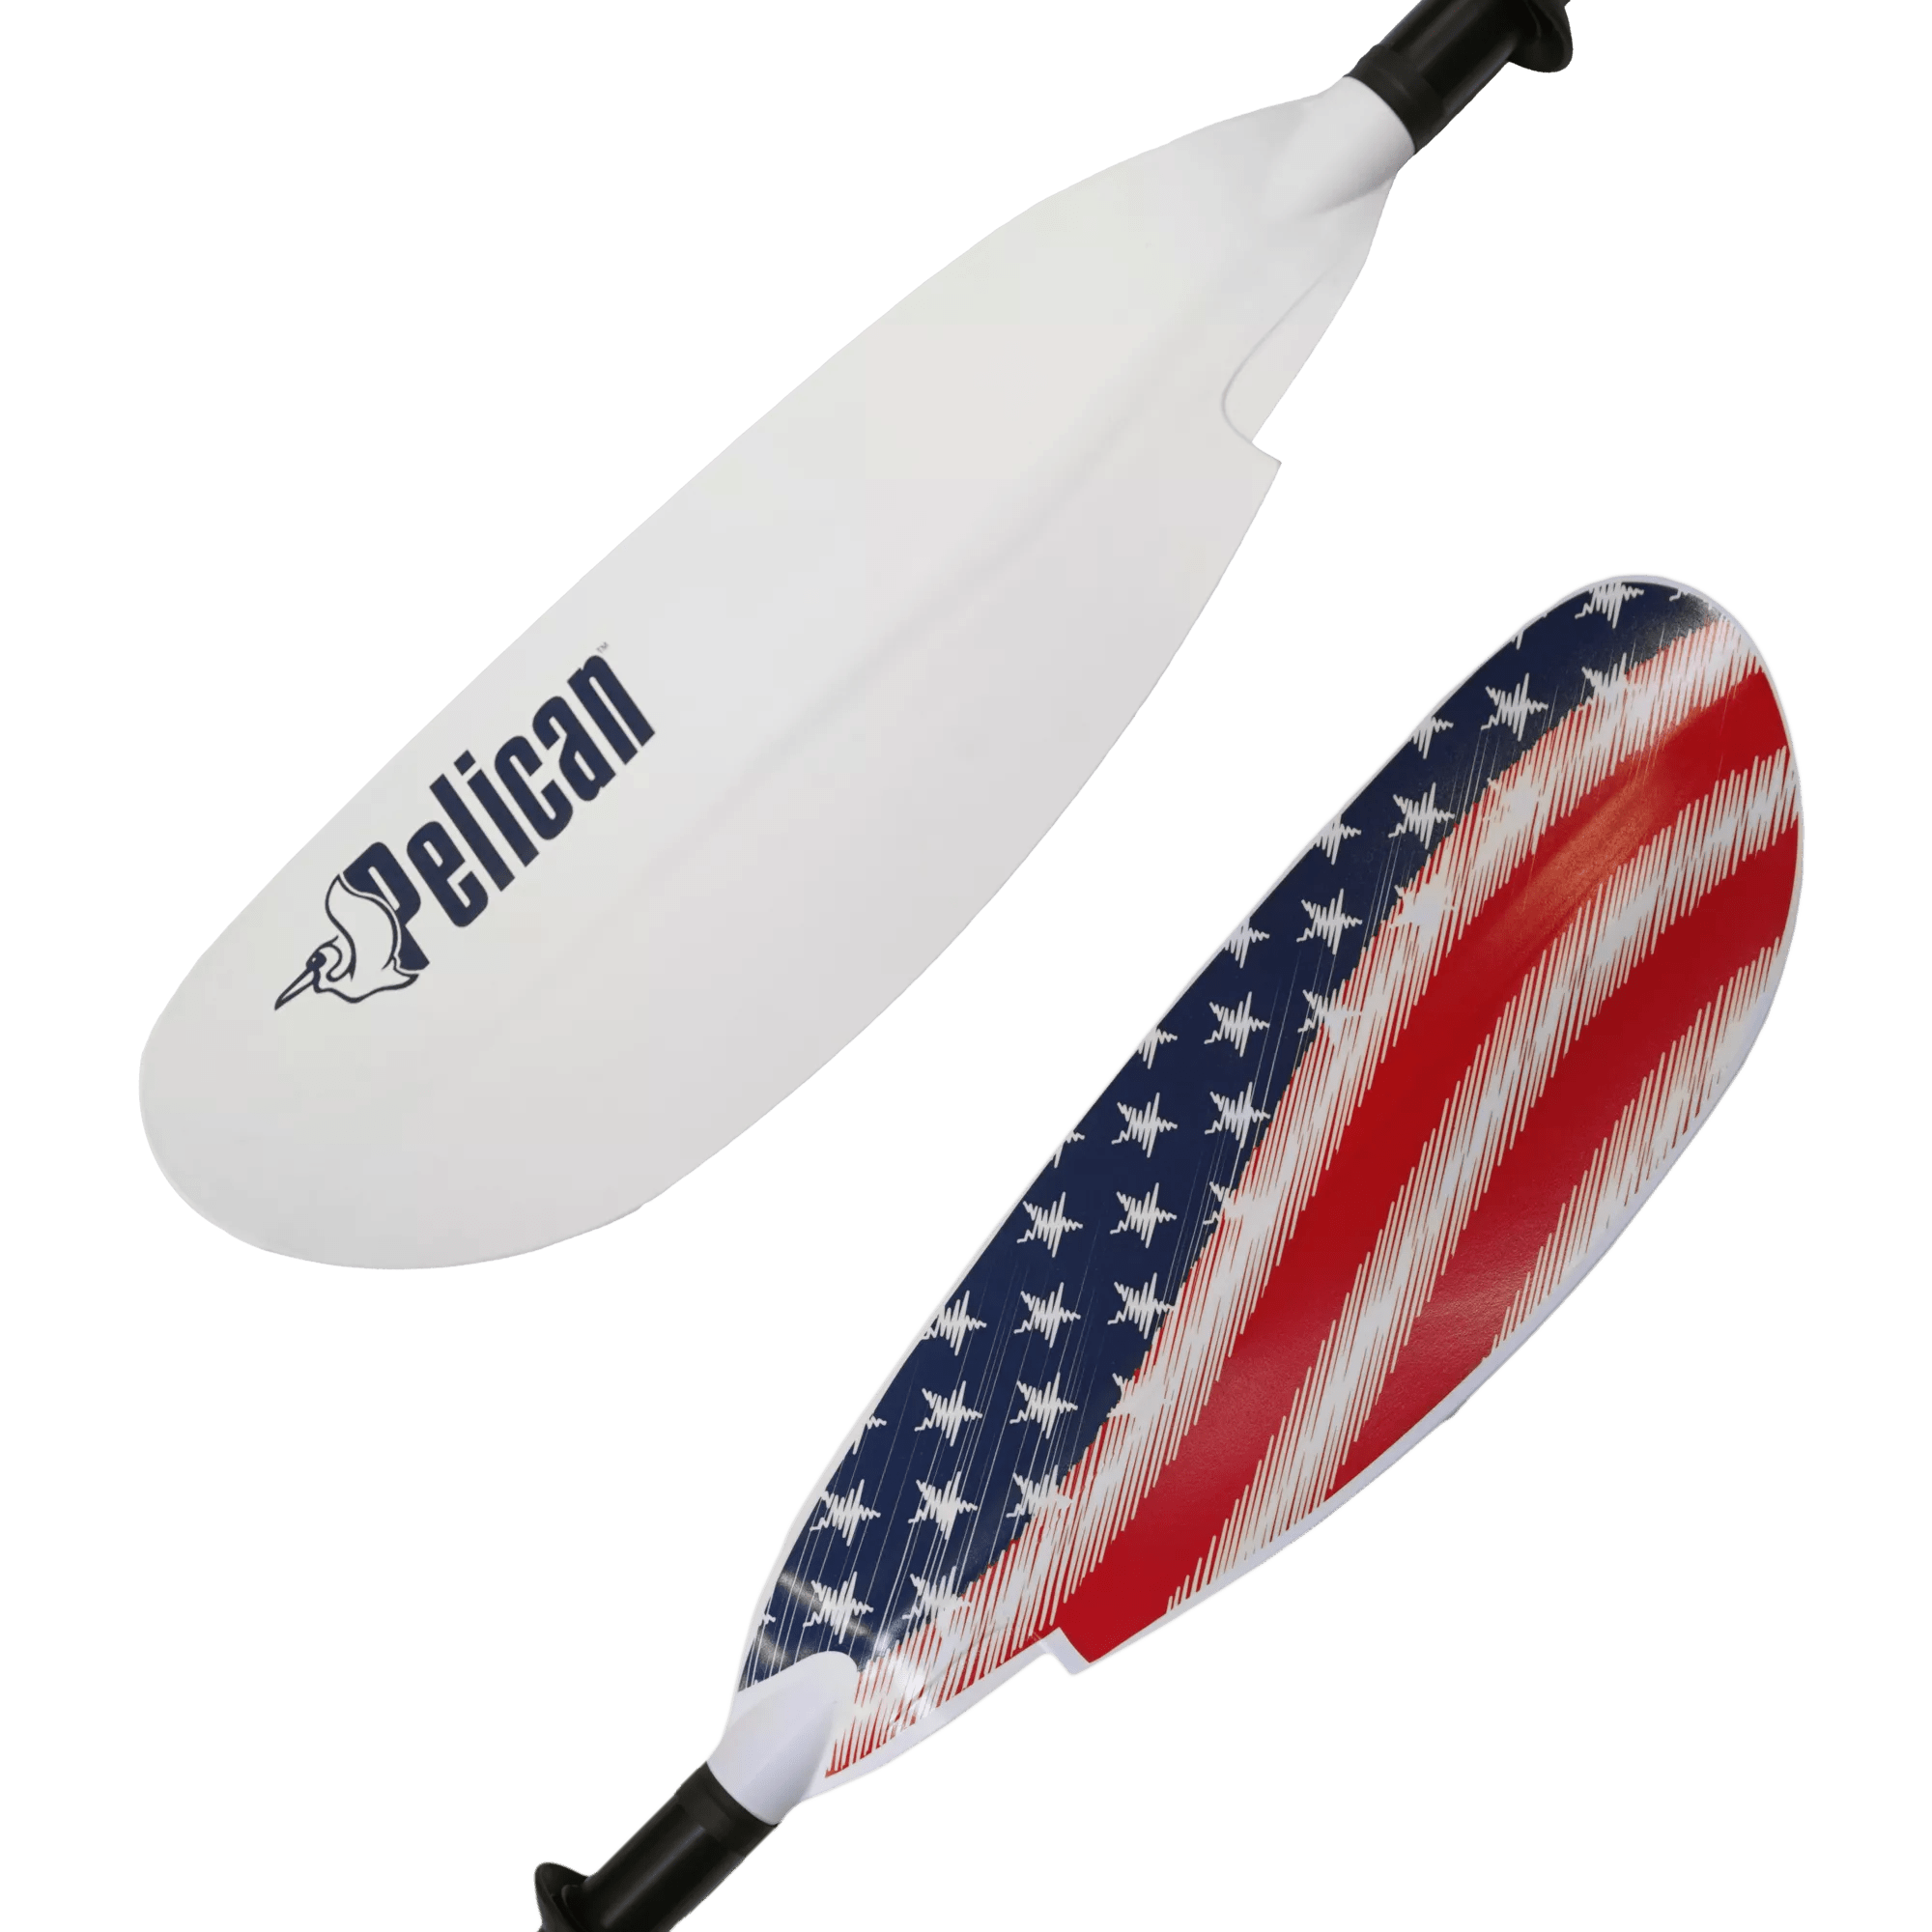 PELICAN - Poseidon Kayak Paddle 230 cm (90.5") - Blue - PS1981-00 - ISO